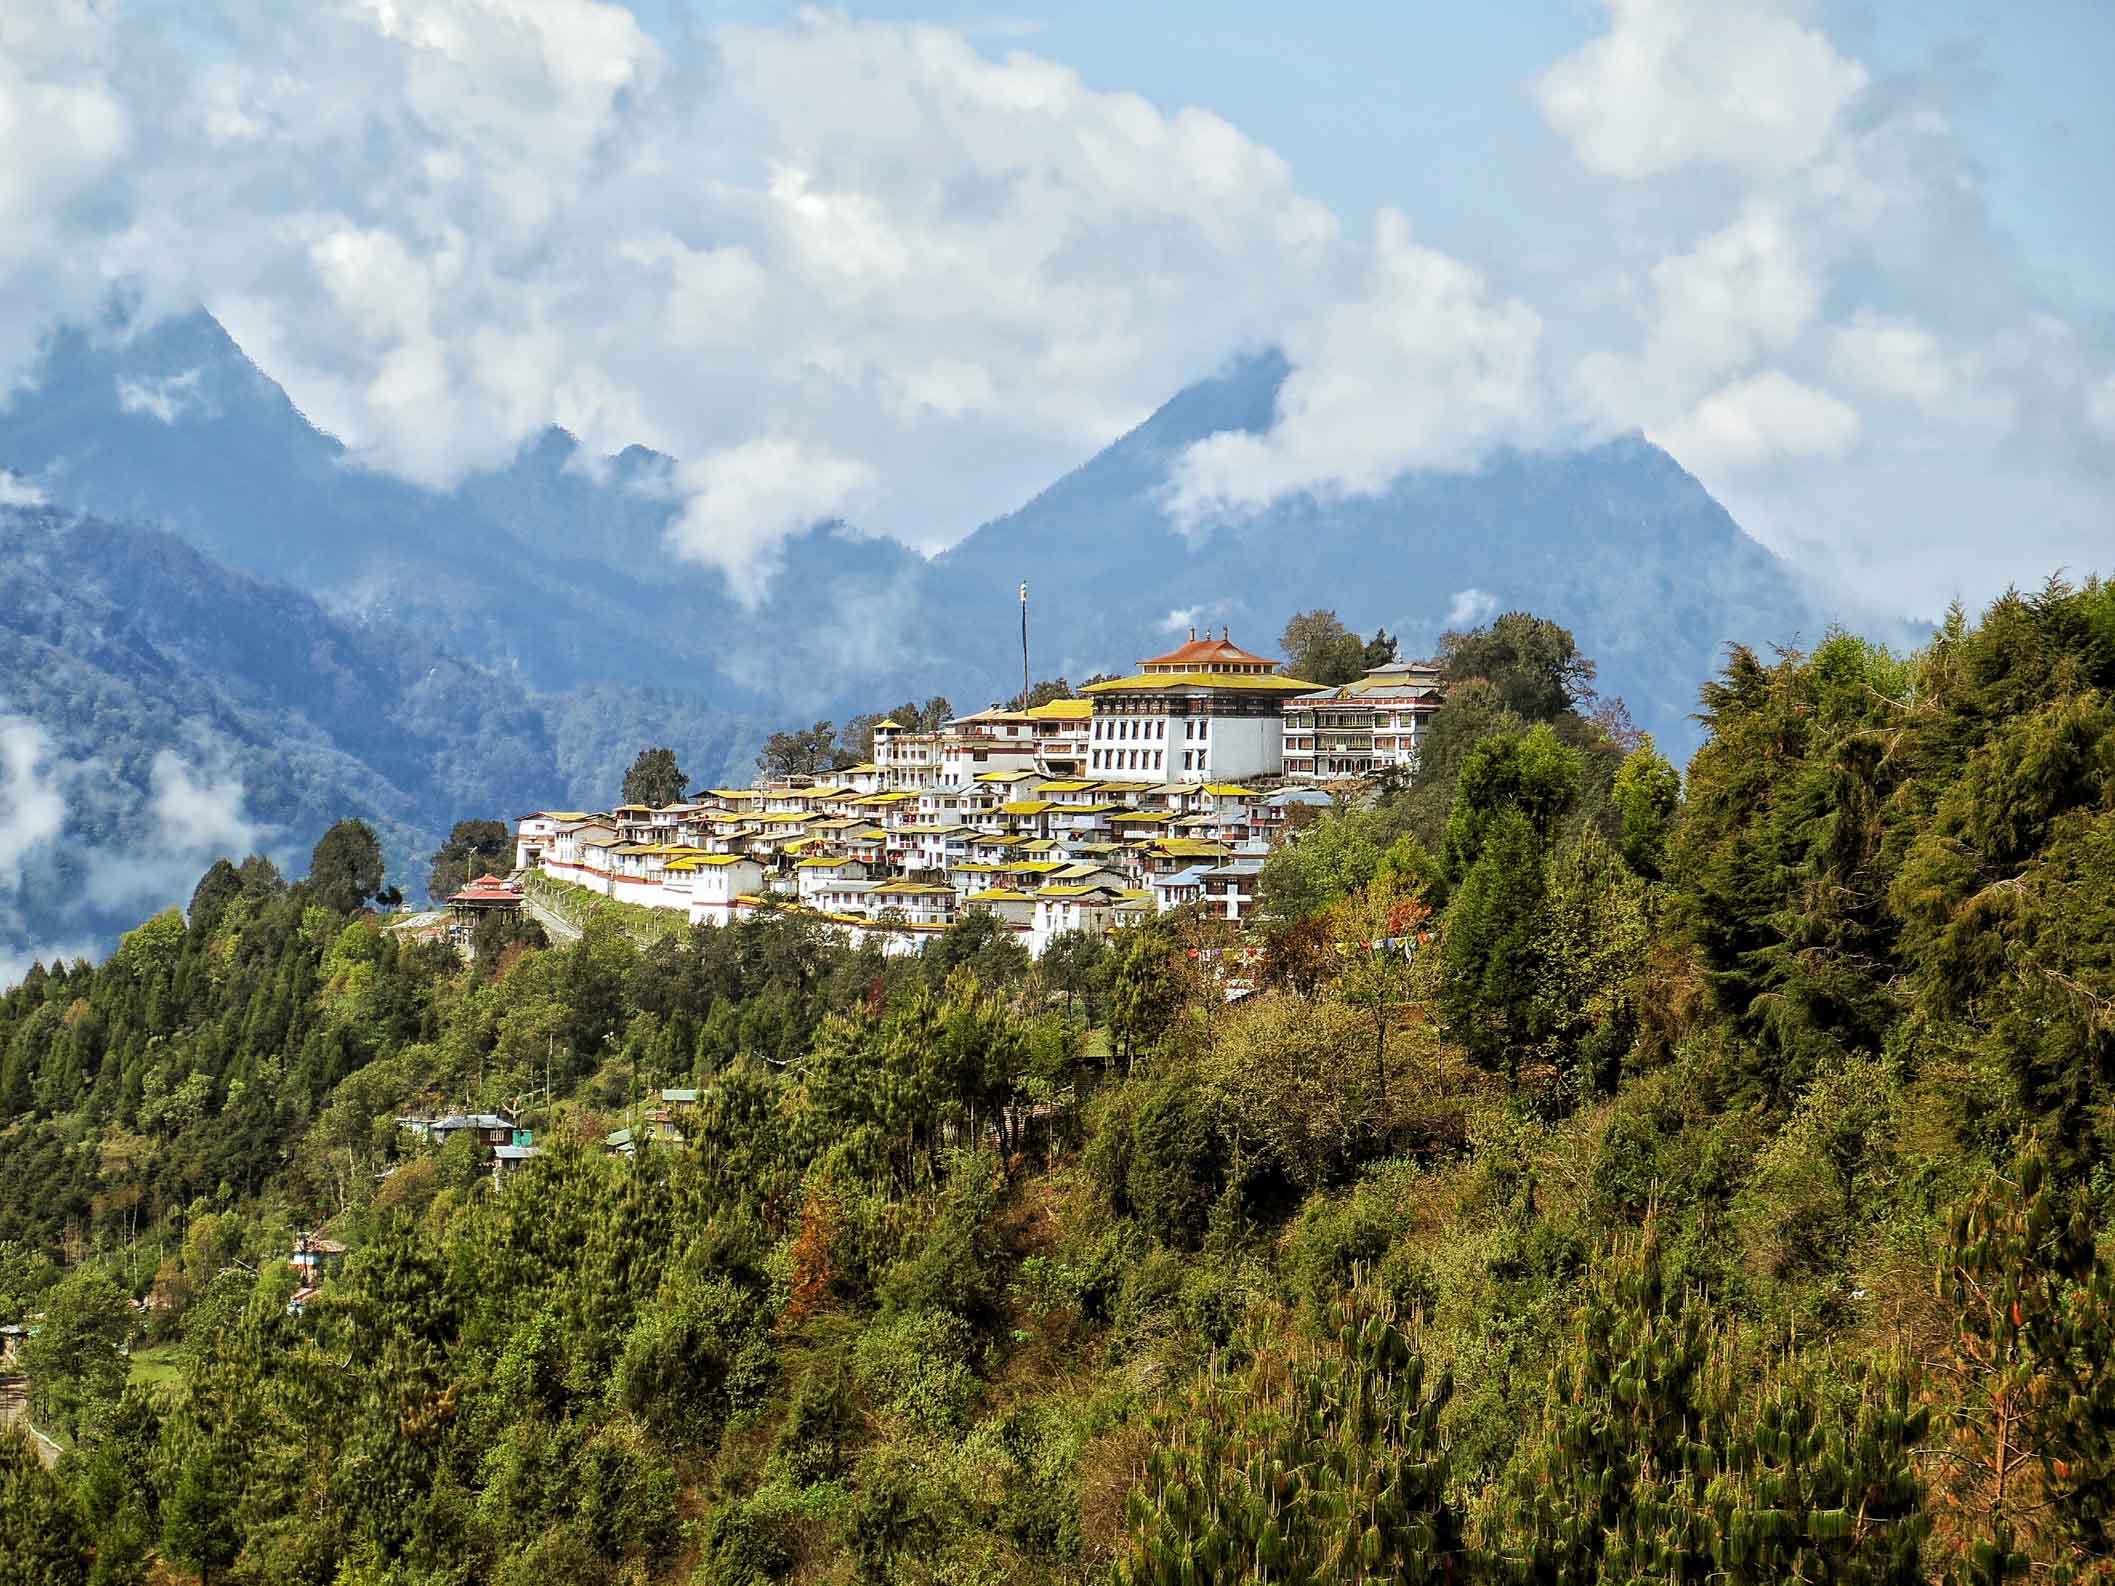 Tawang Monastery in India